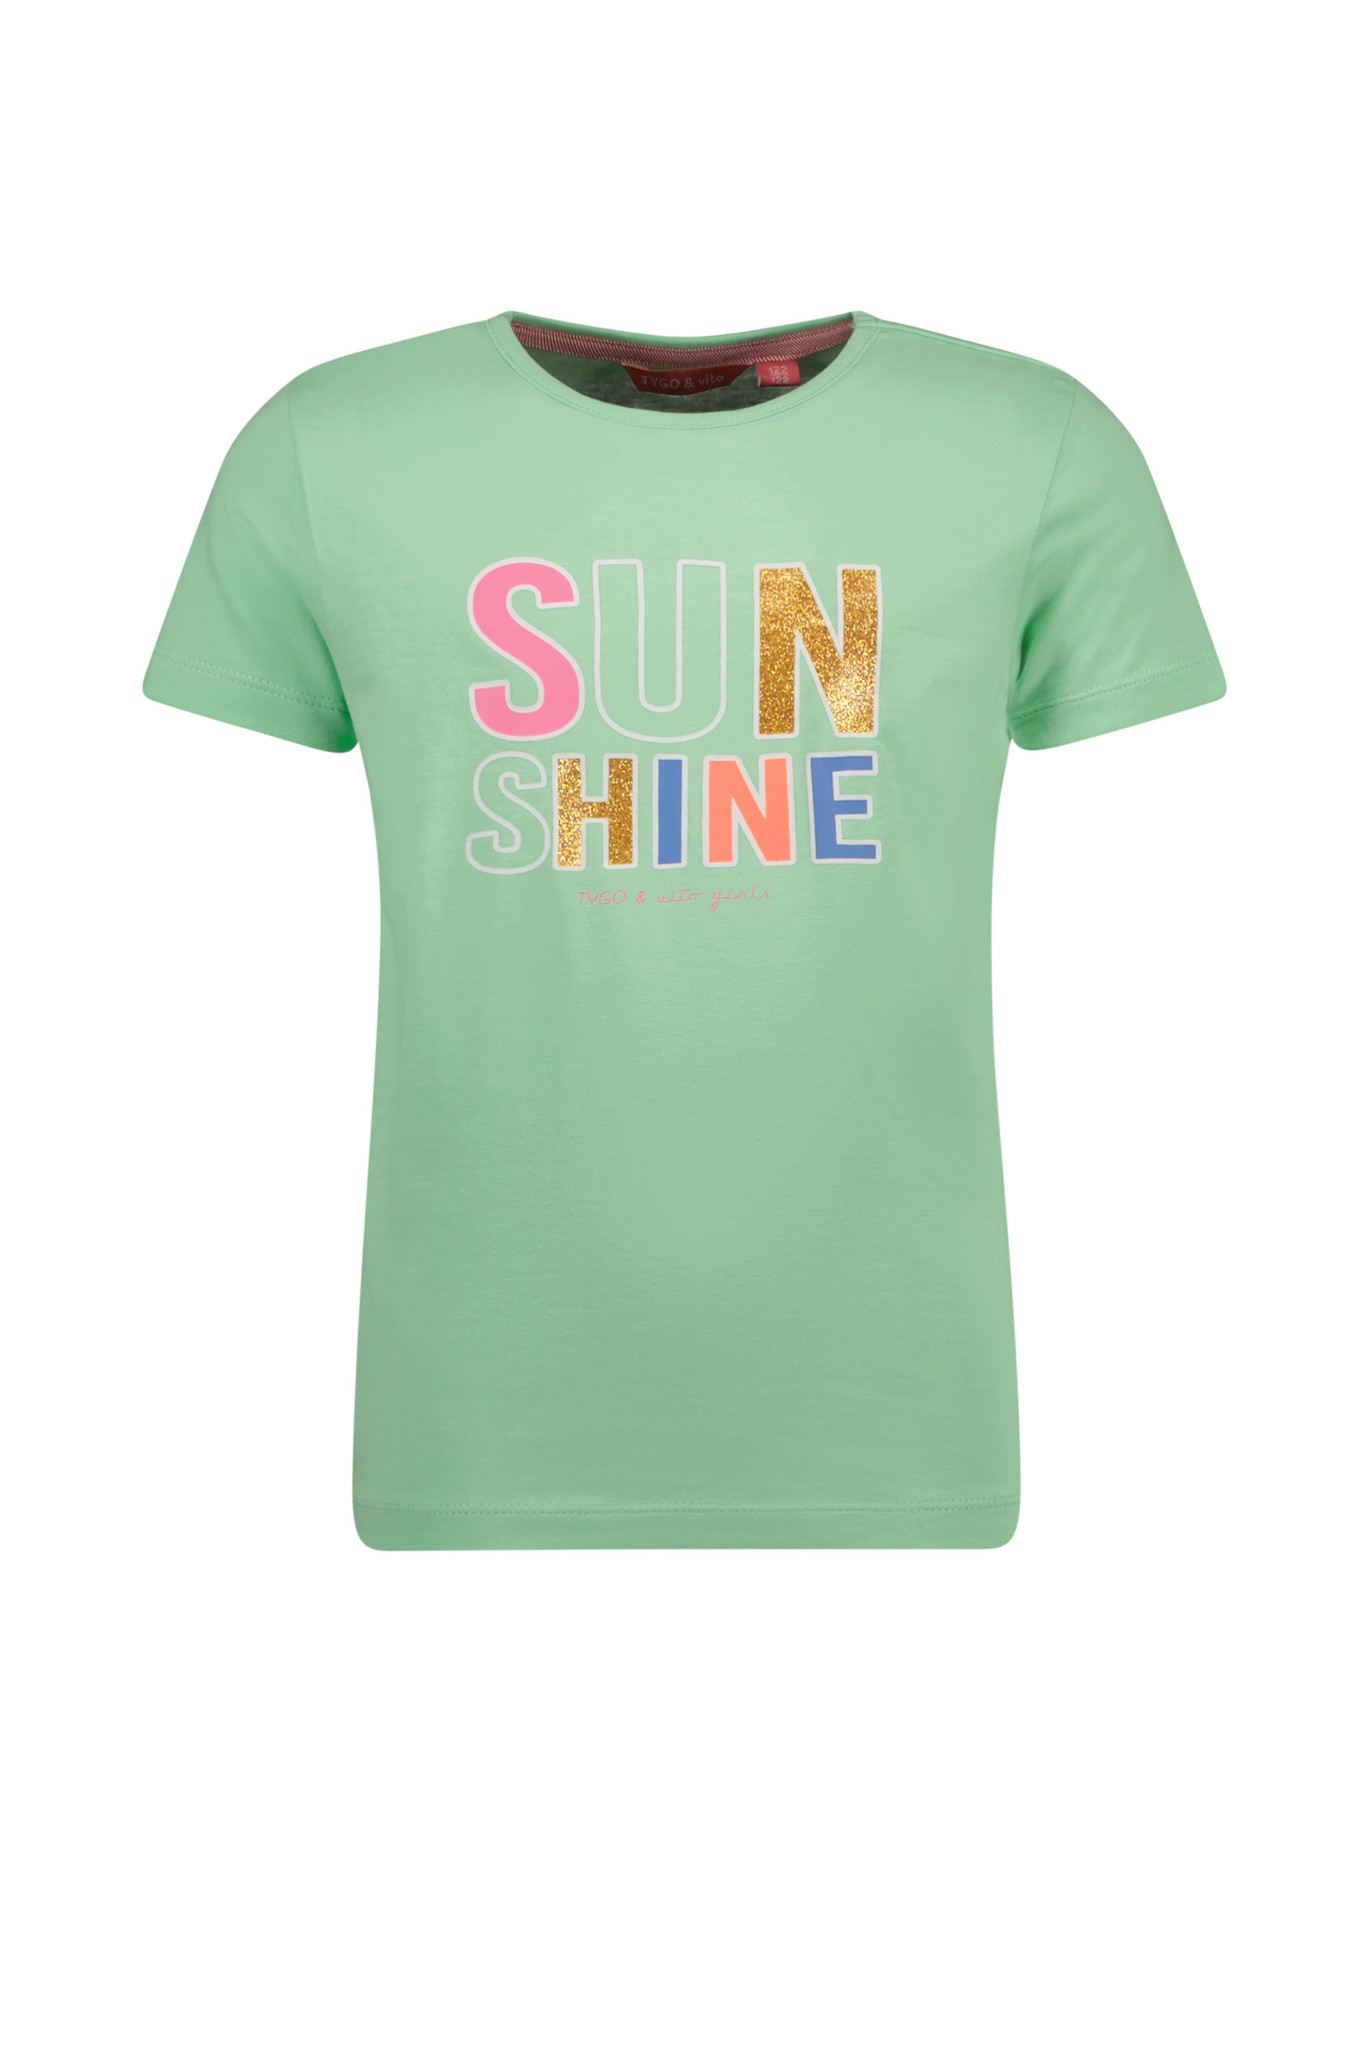 Tygo & Vito Meisjes t-shirt Sunshine - Mint groen